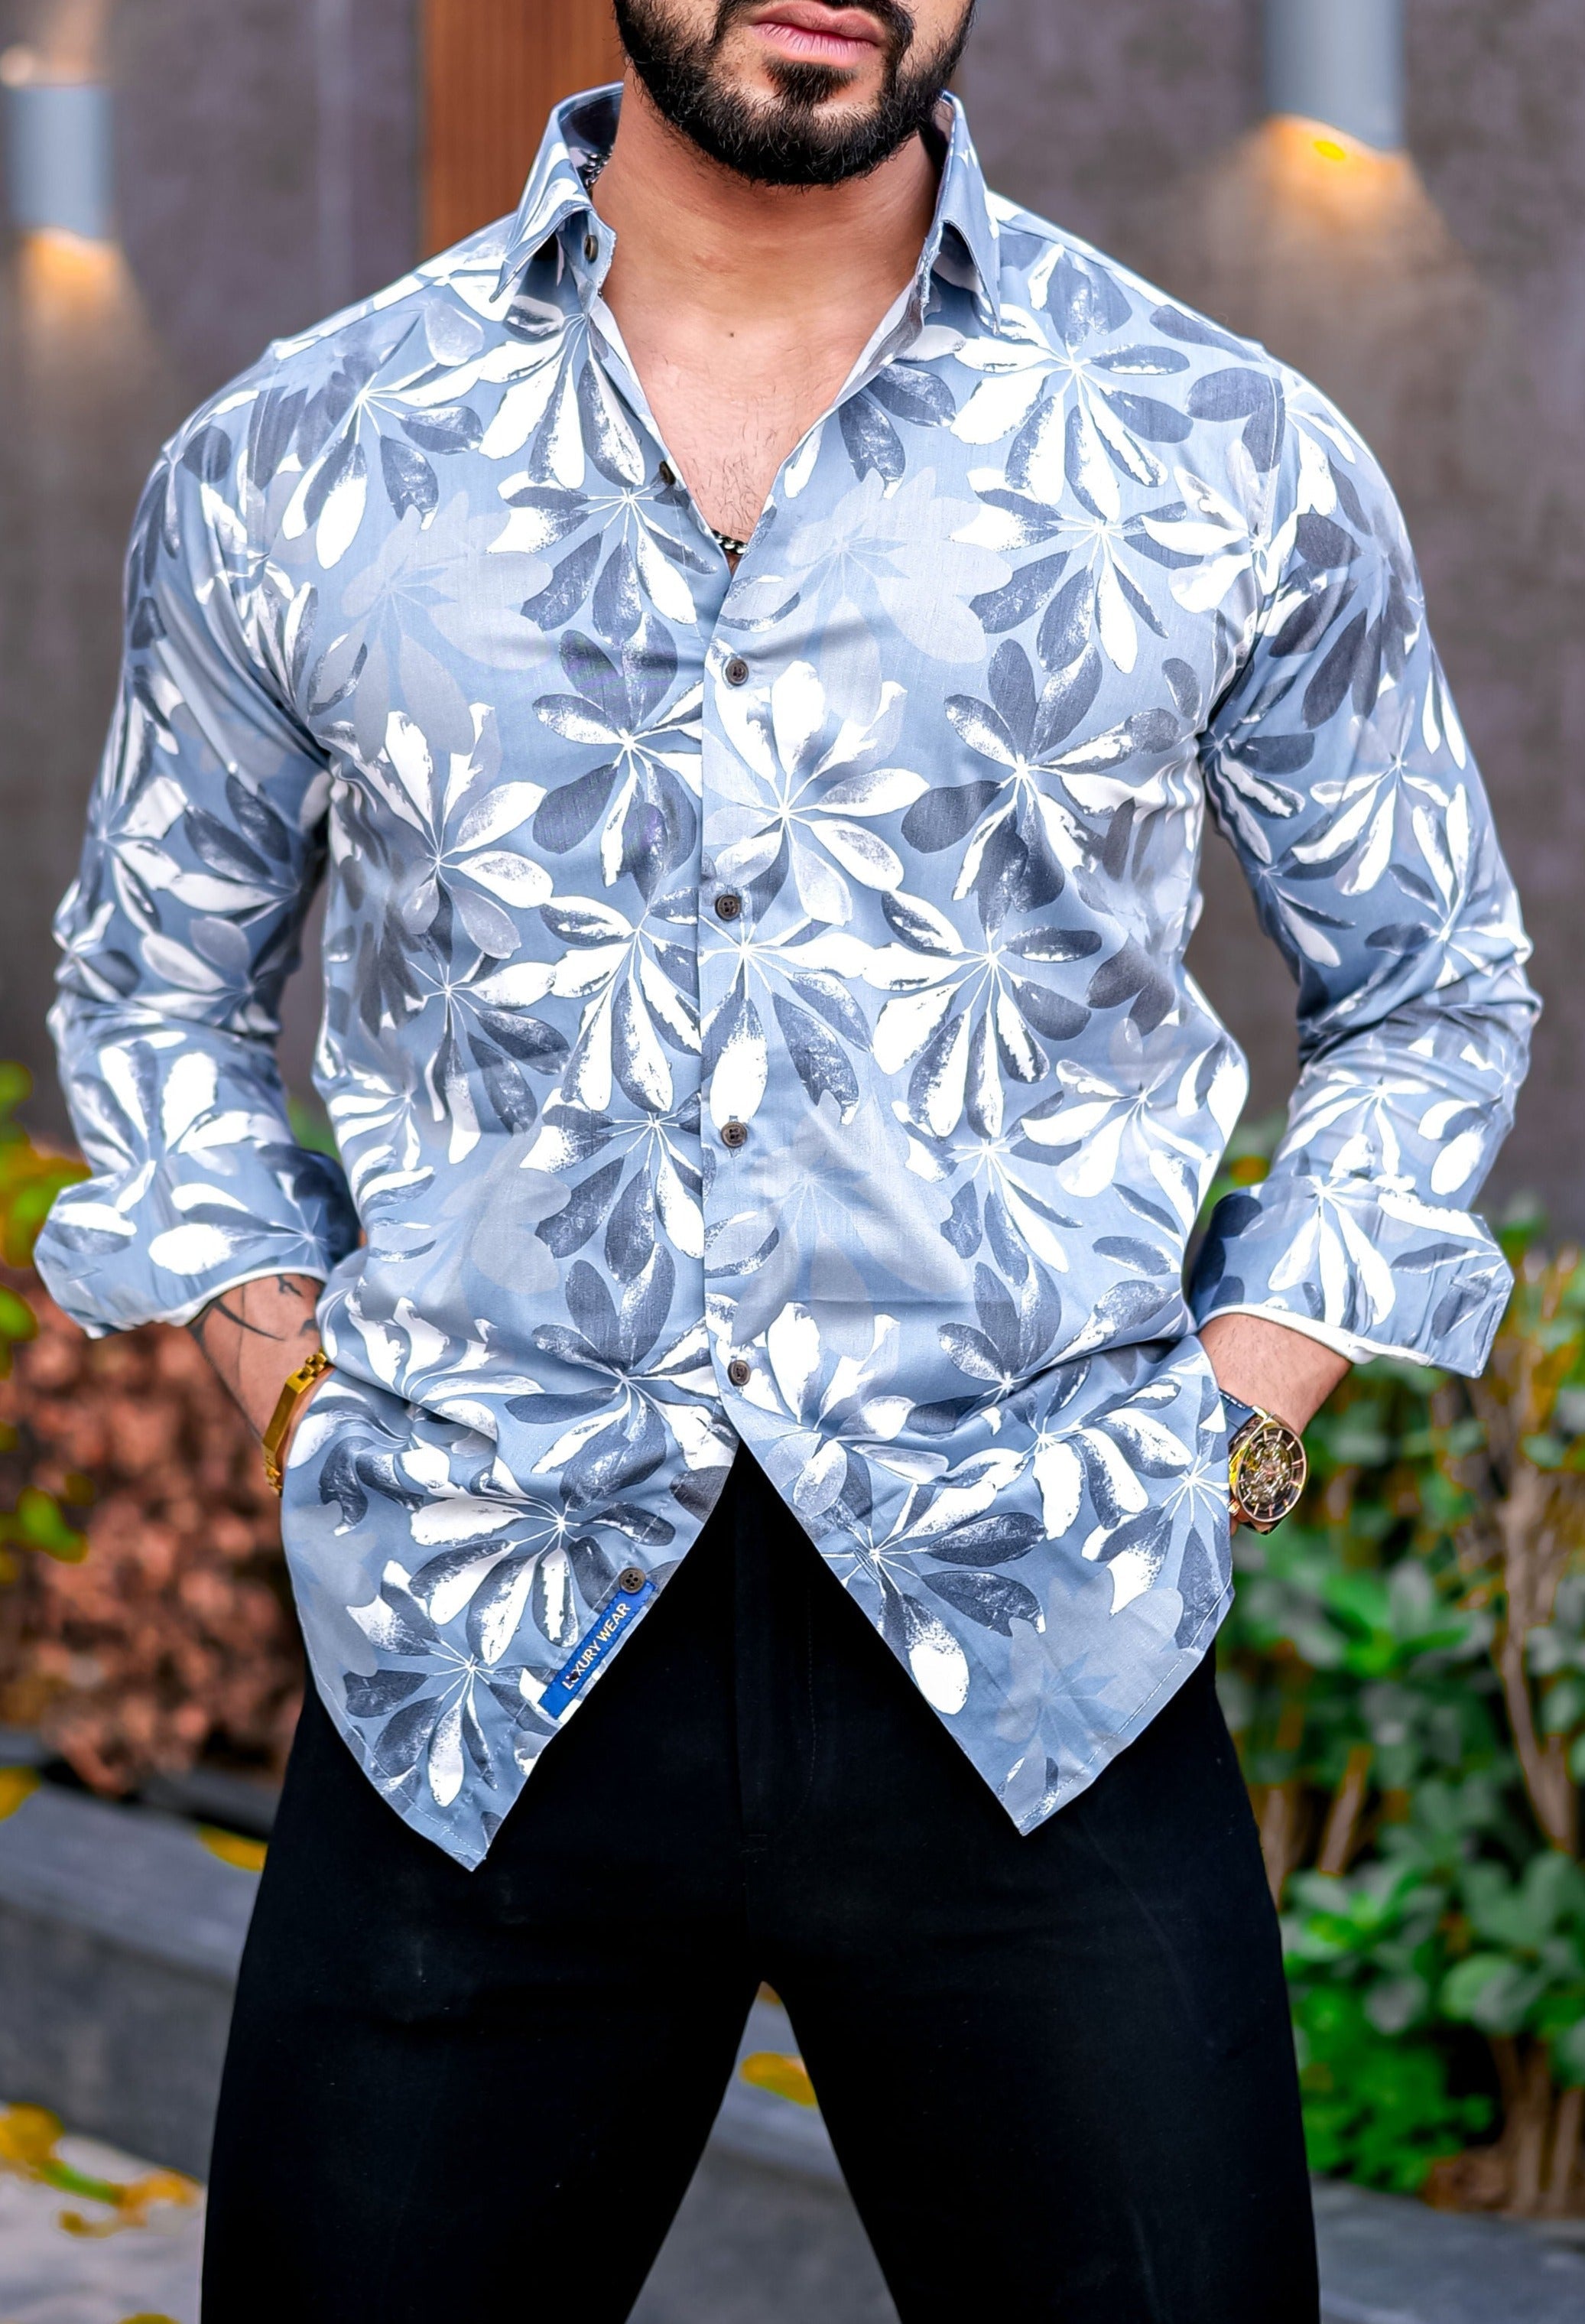 a man wearing a silver shirt and black pants